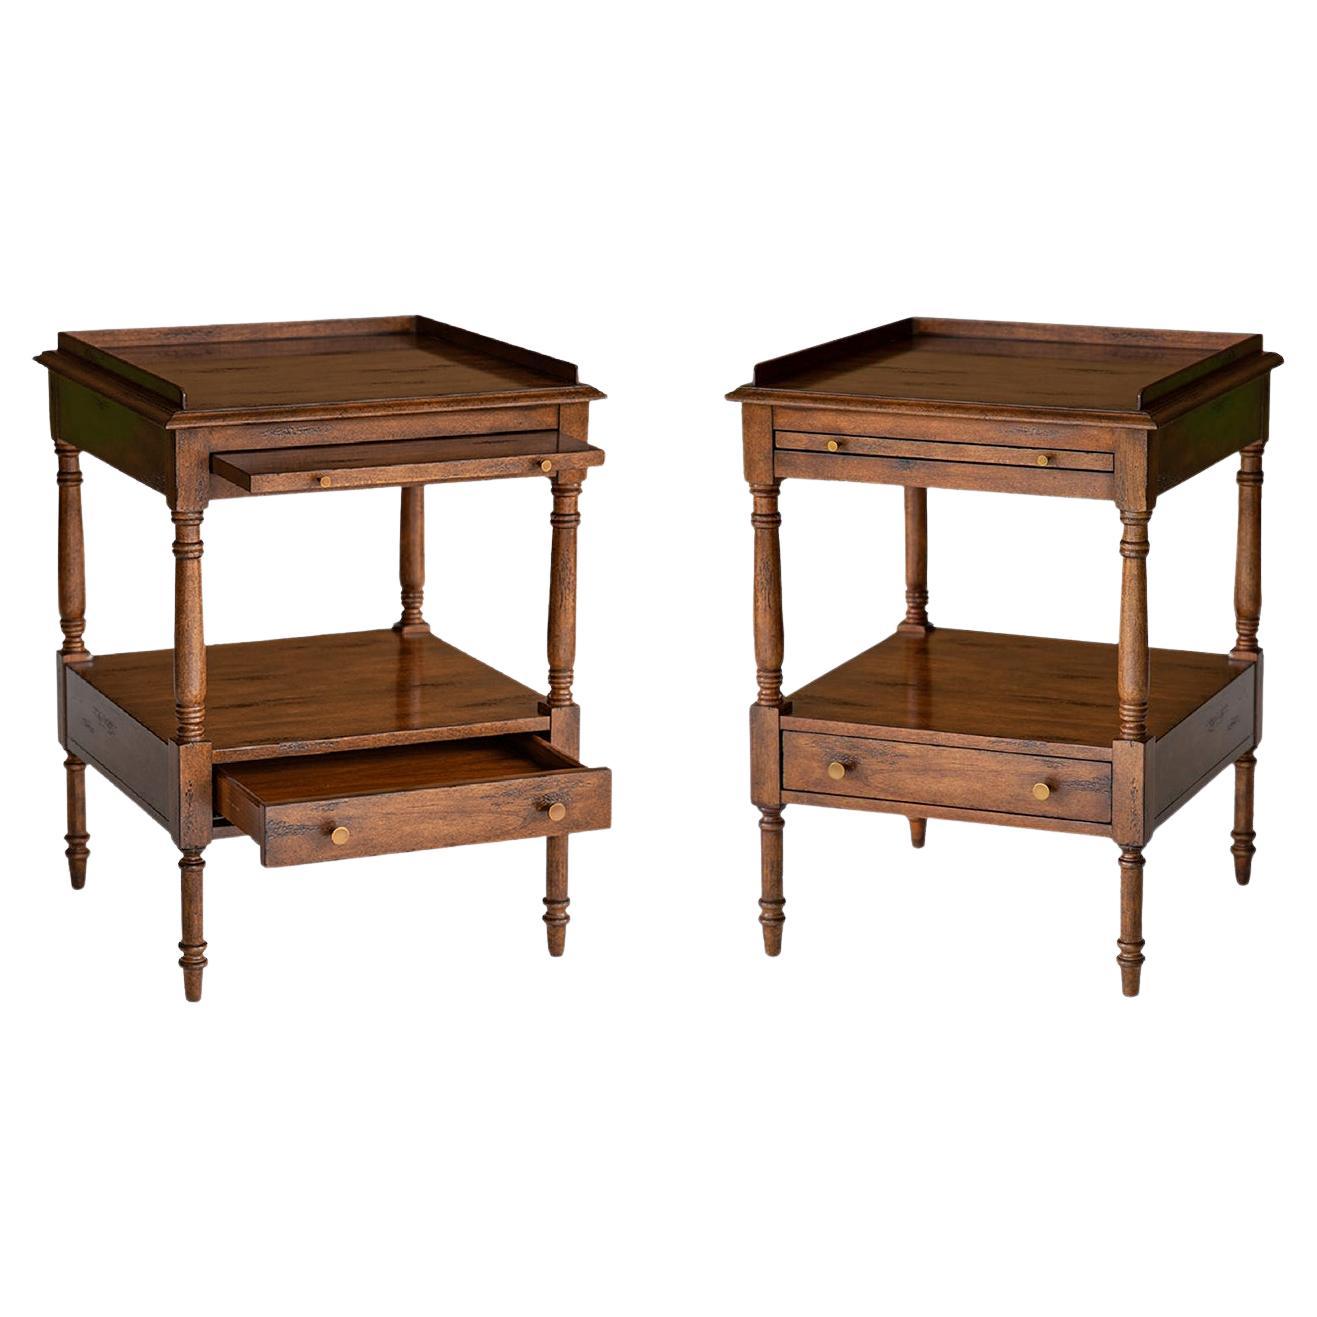 Pair of Regency Style Side Tables